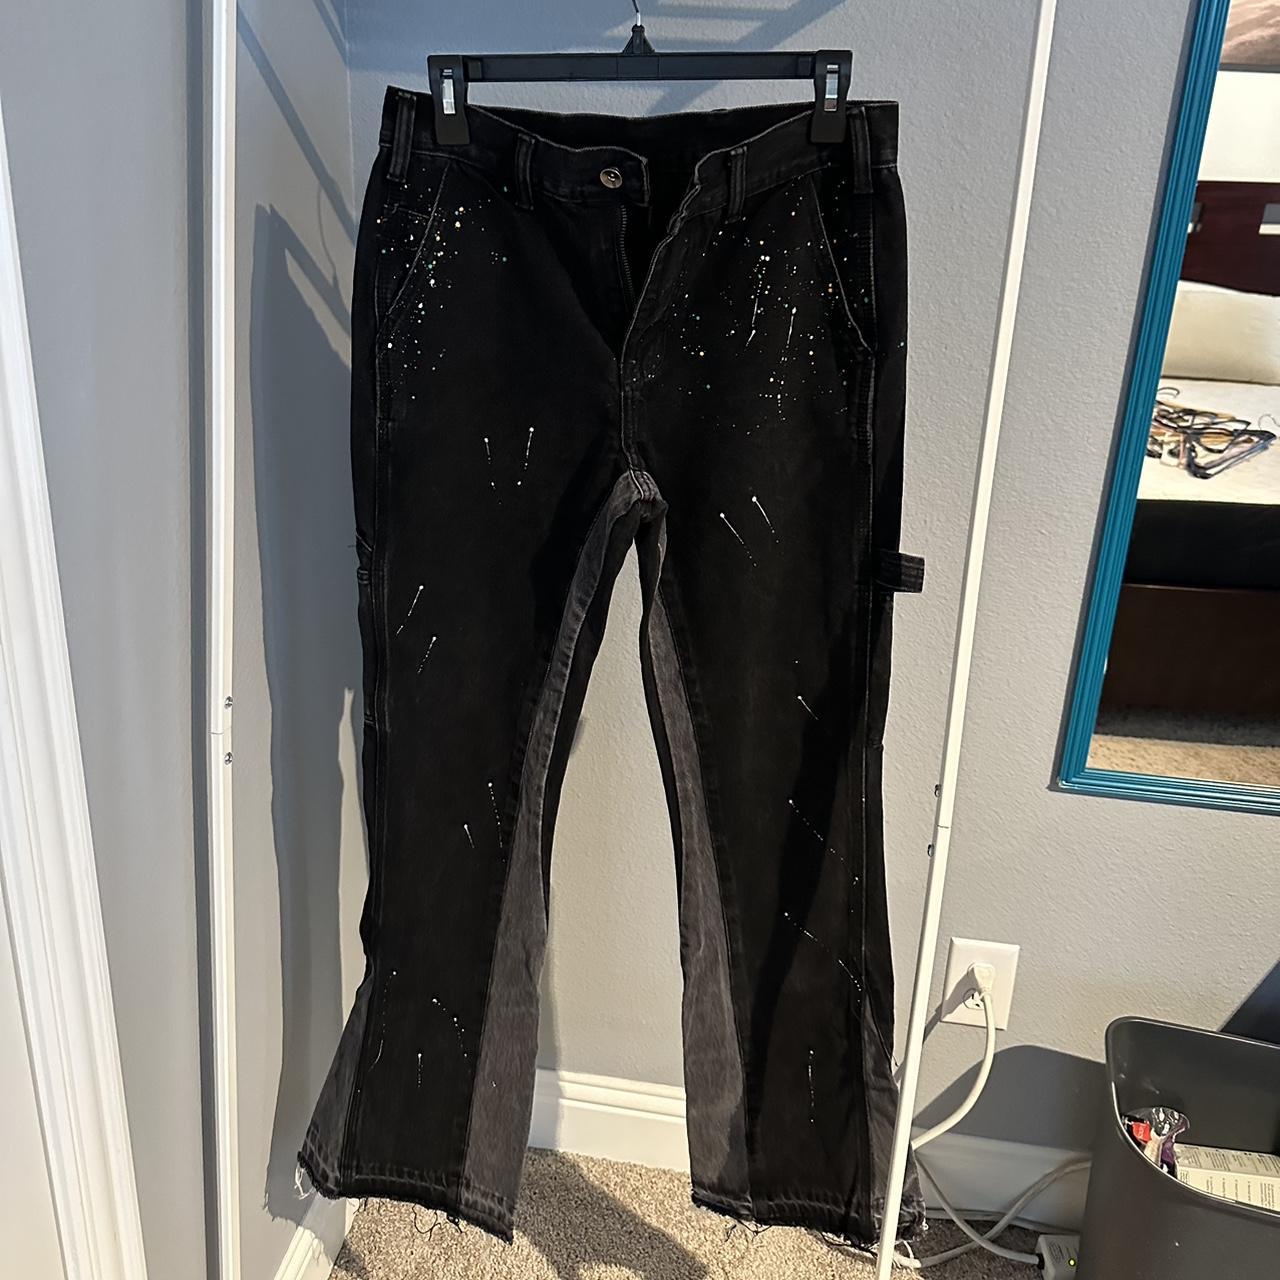 Gallery dept look alike custom jeans size 30 good... - Depop